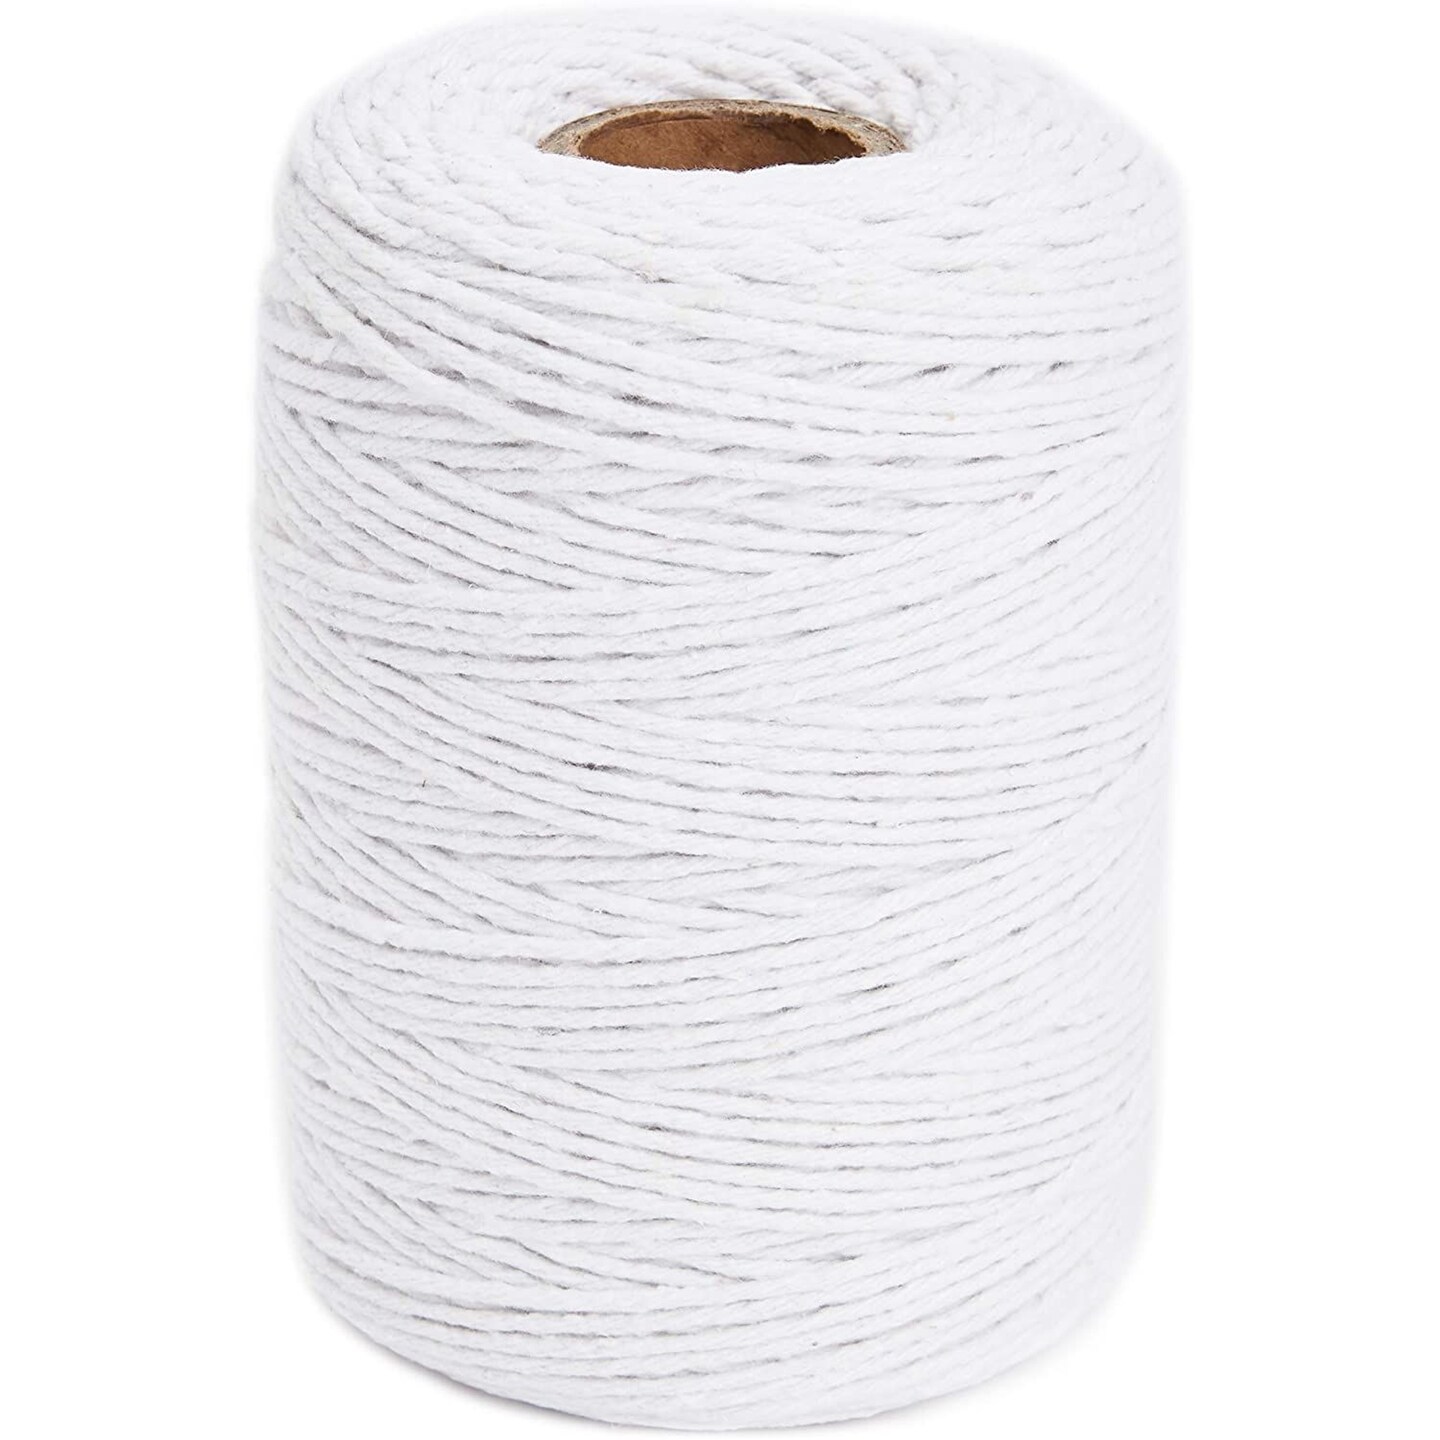 Cotton String Craft Macrame Cord for Plant Hanger Handmade